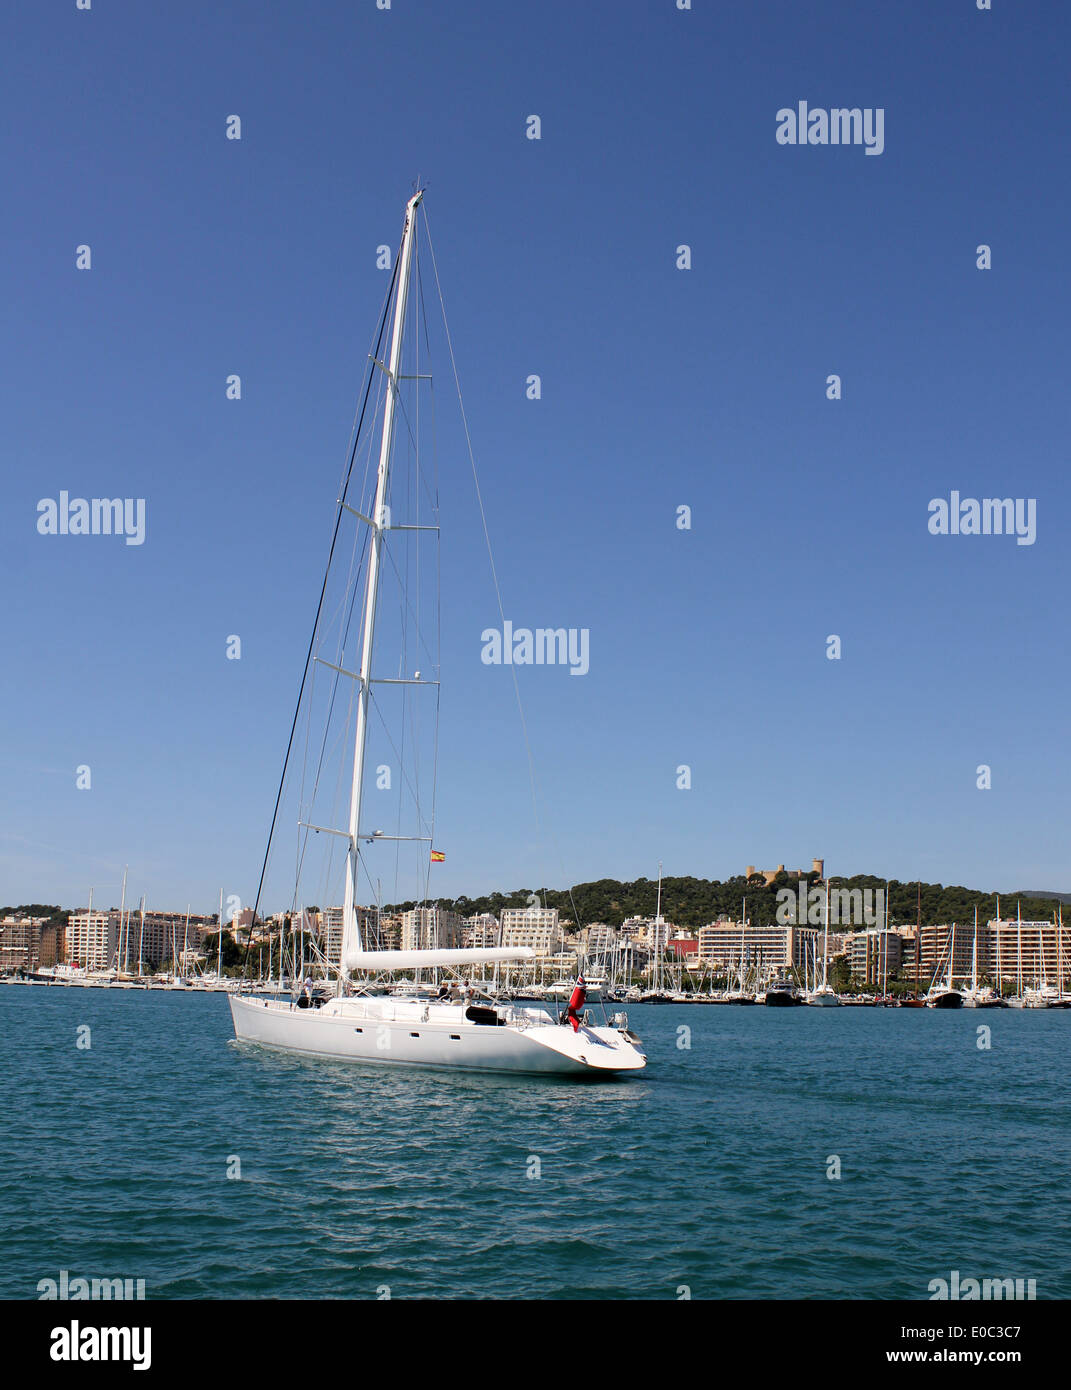 Luxury Mallorca - Luxury Sailing Yacht - Palma Paseo Maritimo + marinas + historic Belver Castle - Palma de Mallorca / Majorca Stock Photo